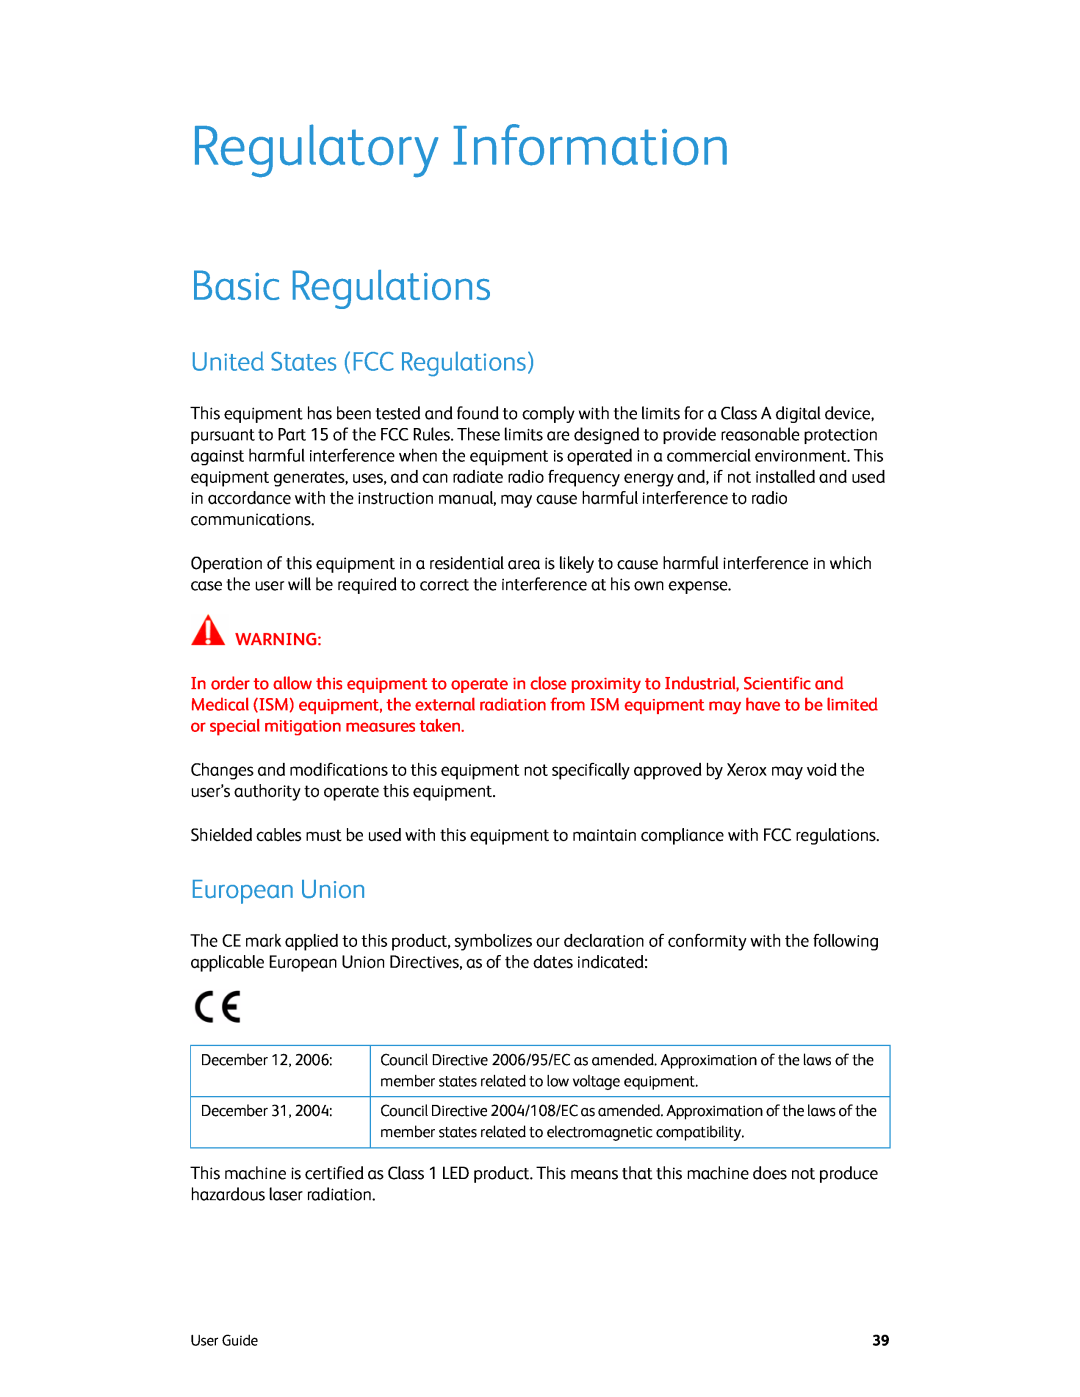 Xerox xerox manual Regulatory Information, Basic Regulations, United States FCC Regulations, European Union 